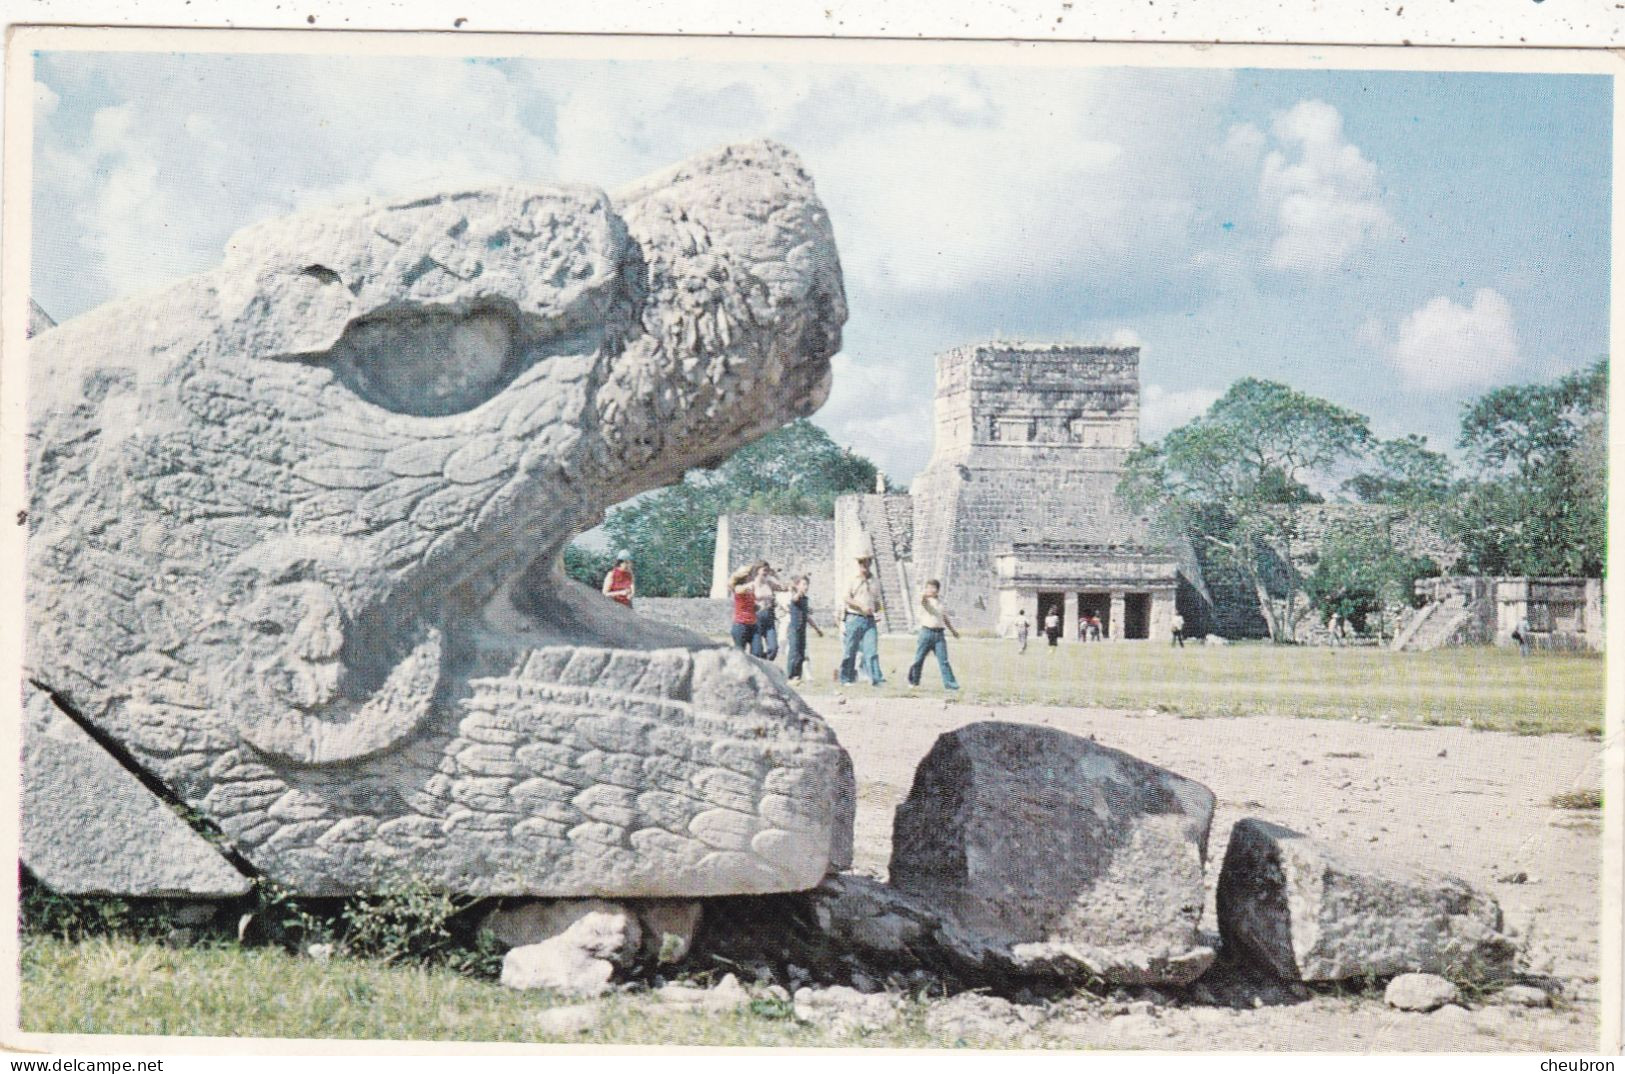 MEXIQUE. MEXICO (ENVOYE DE). YUCATAN . CHICHEN-ITZA " TEMPLE OF THE JAGUAR  " .ANNEE 1988+ TEXTE + TIMBRES. - Mexico